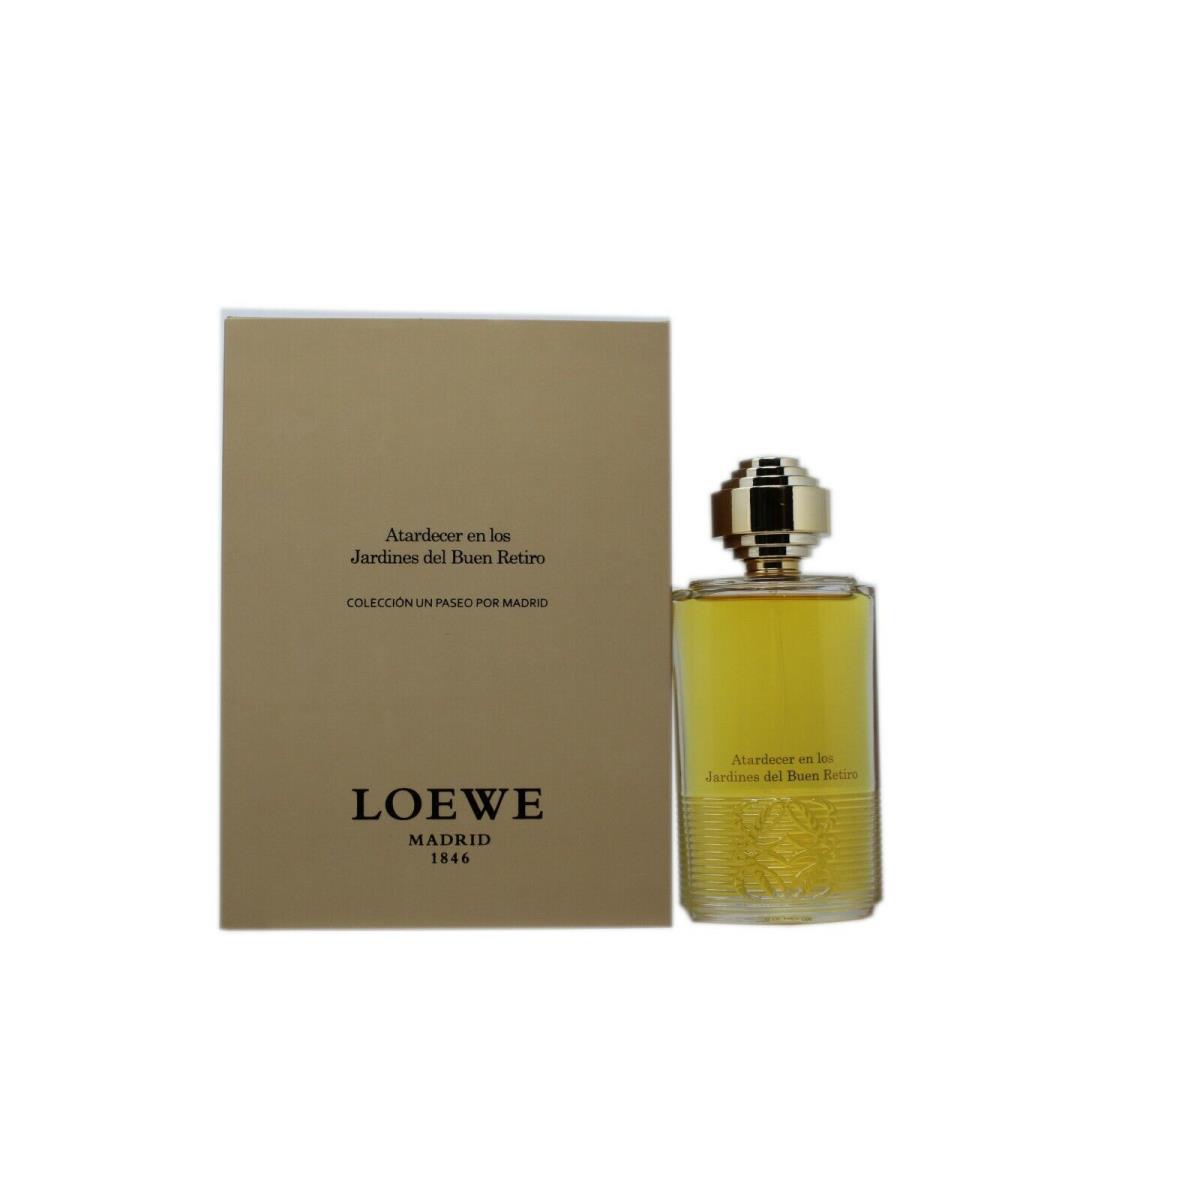 Loewe Madrid 1846 Atardecer EN Los Jardines Del Buen Retiro Eau DE Parfum 100ML